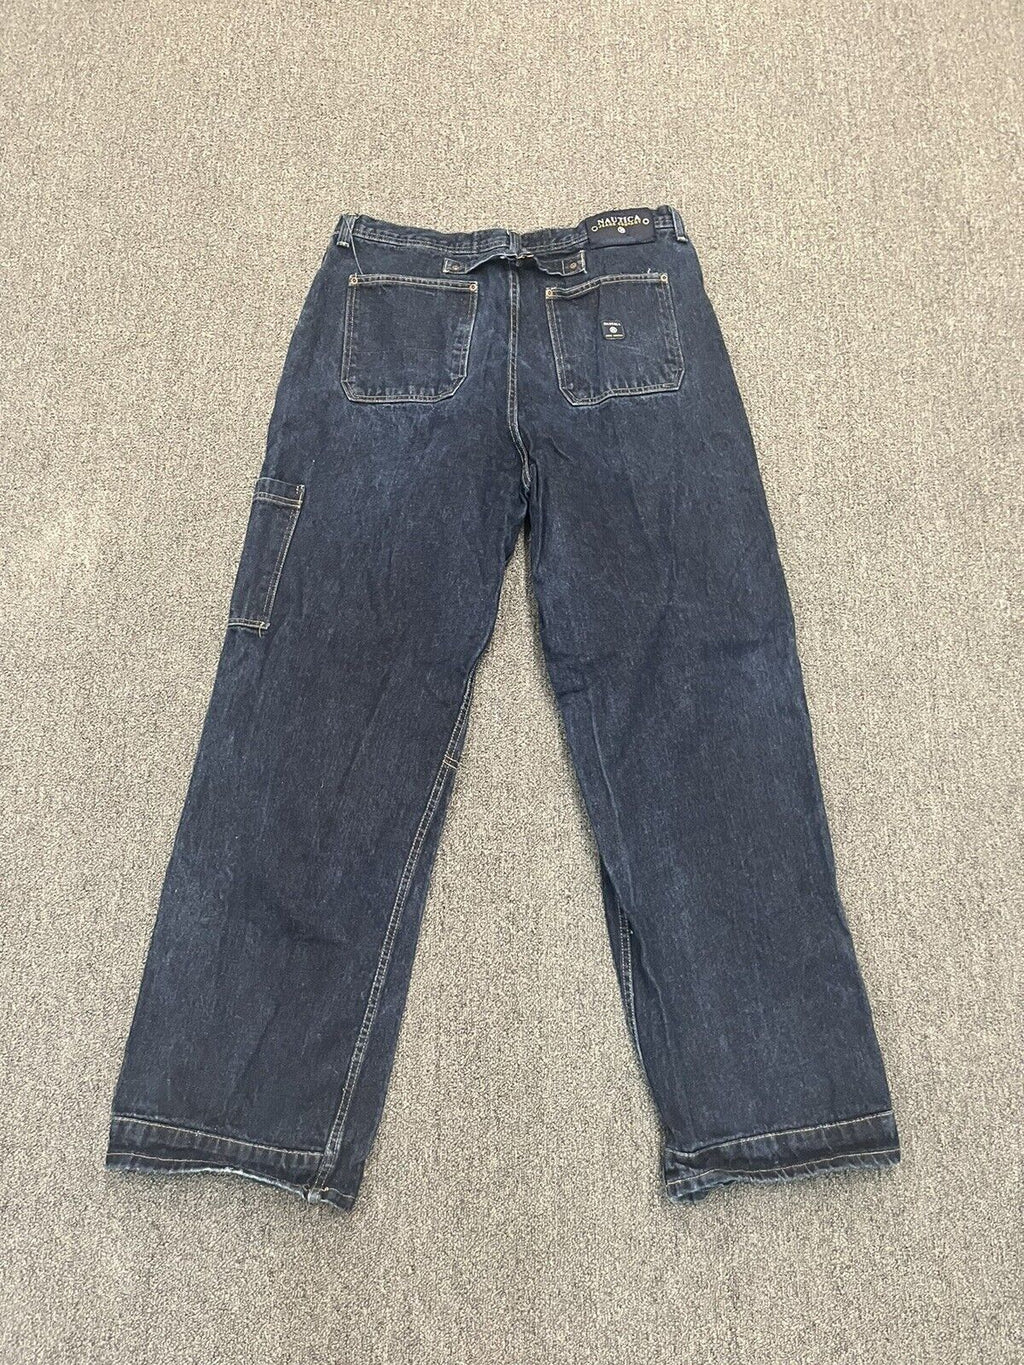 Nautica Jeans Men's Size 42x34 Dark Wash Blue Denim Flap Pockets Vintage - Hype Stew Sneakers Detroit